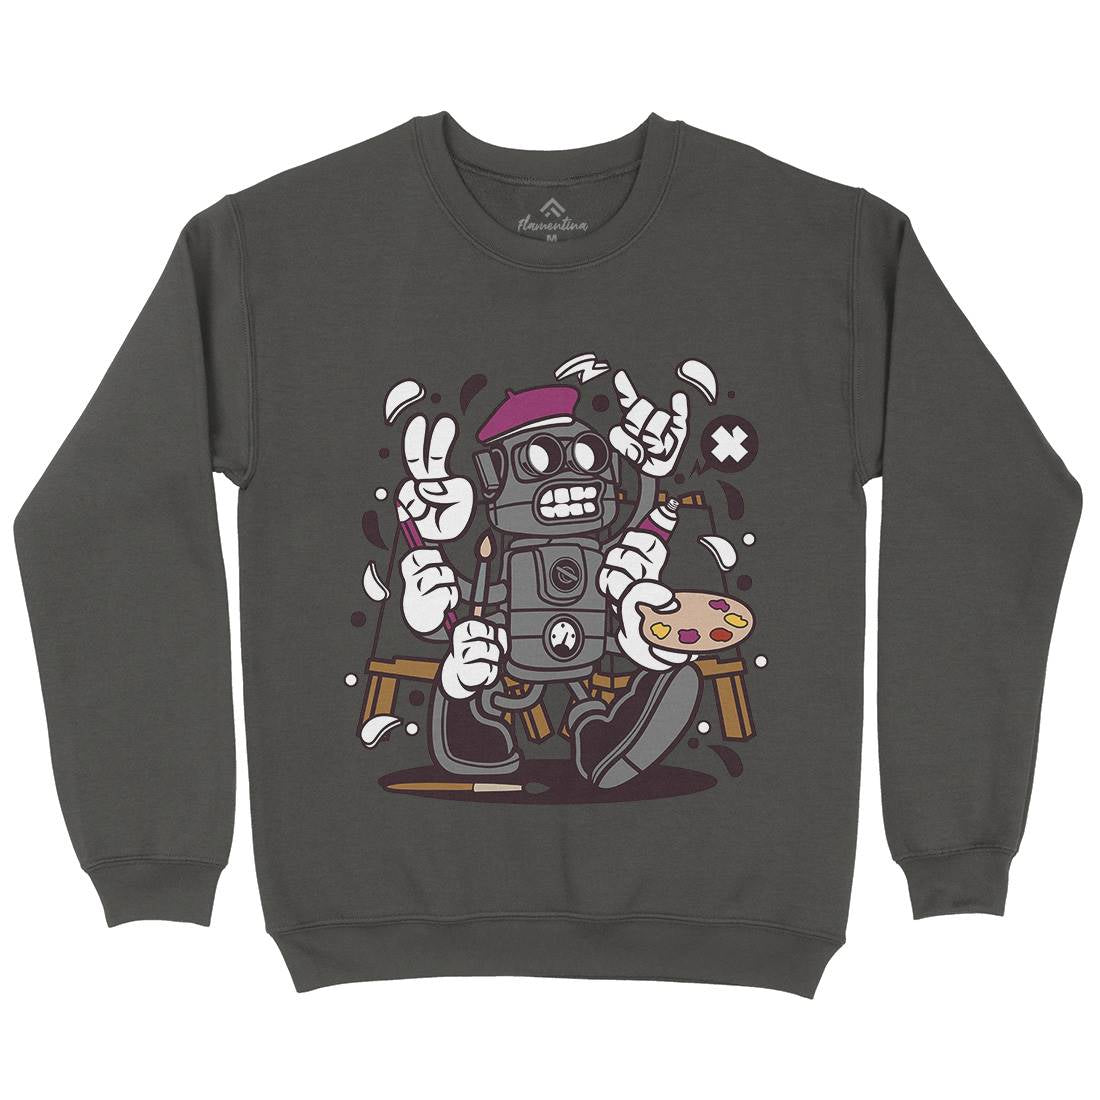 Painter Robot Kids Crew Neck Sweatshirt Retro C182